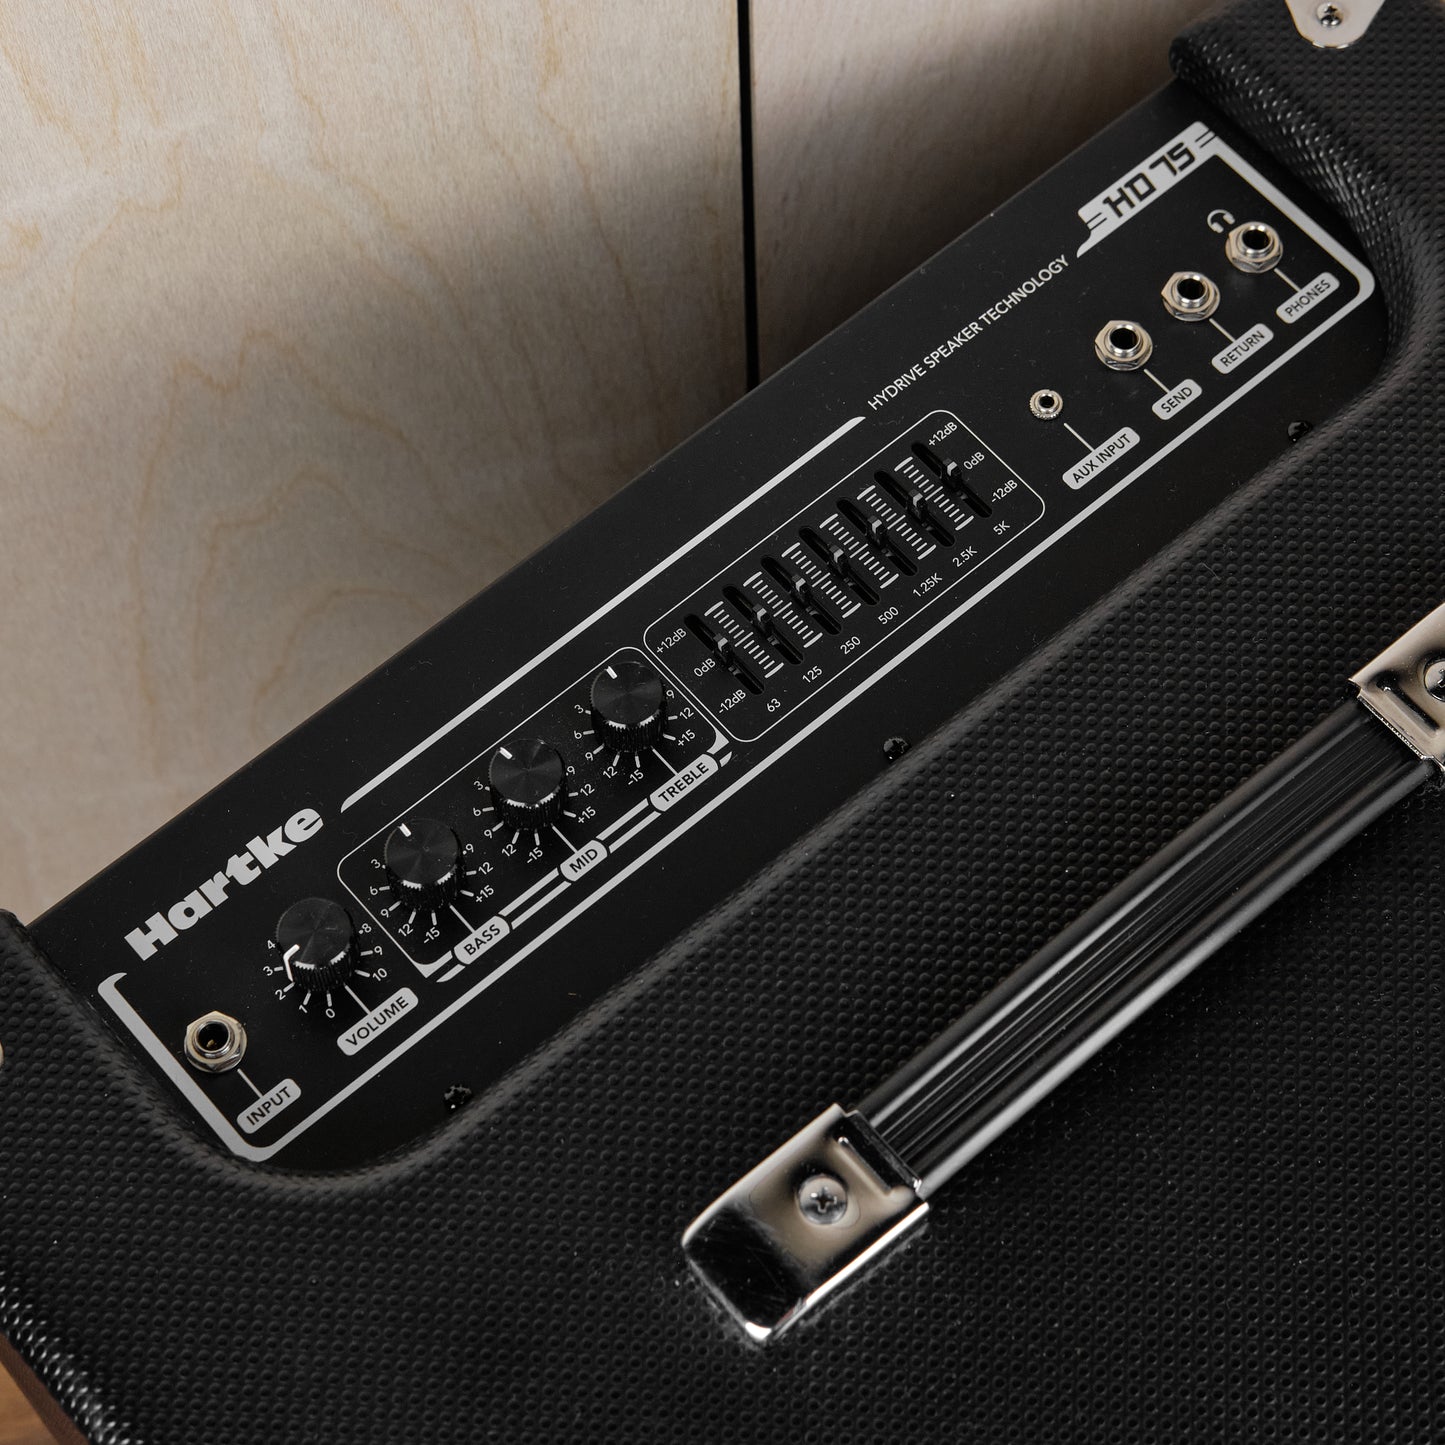 Hartke HD75 Bass Combo (Second-Hand)